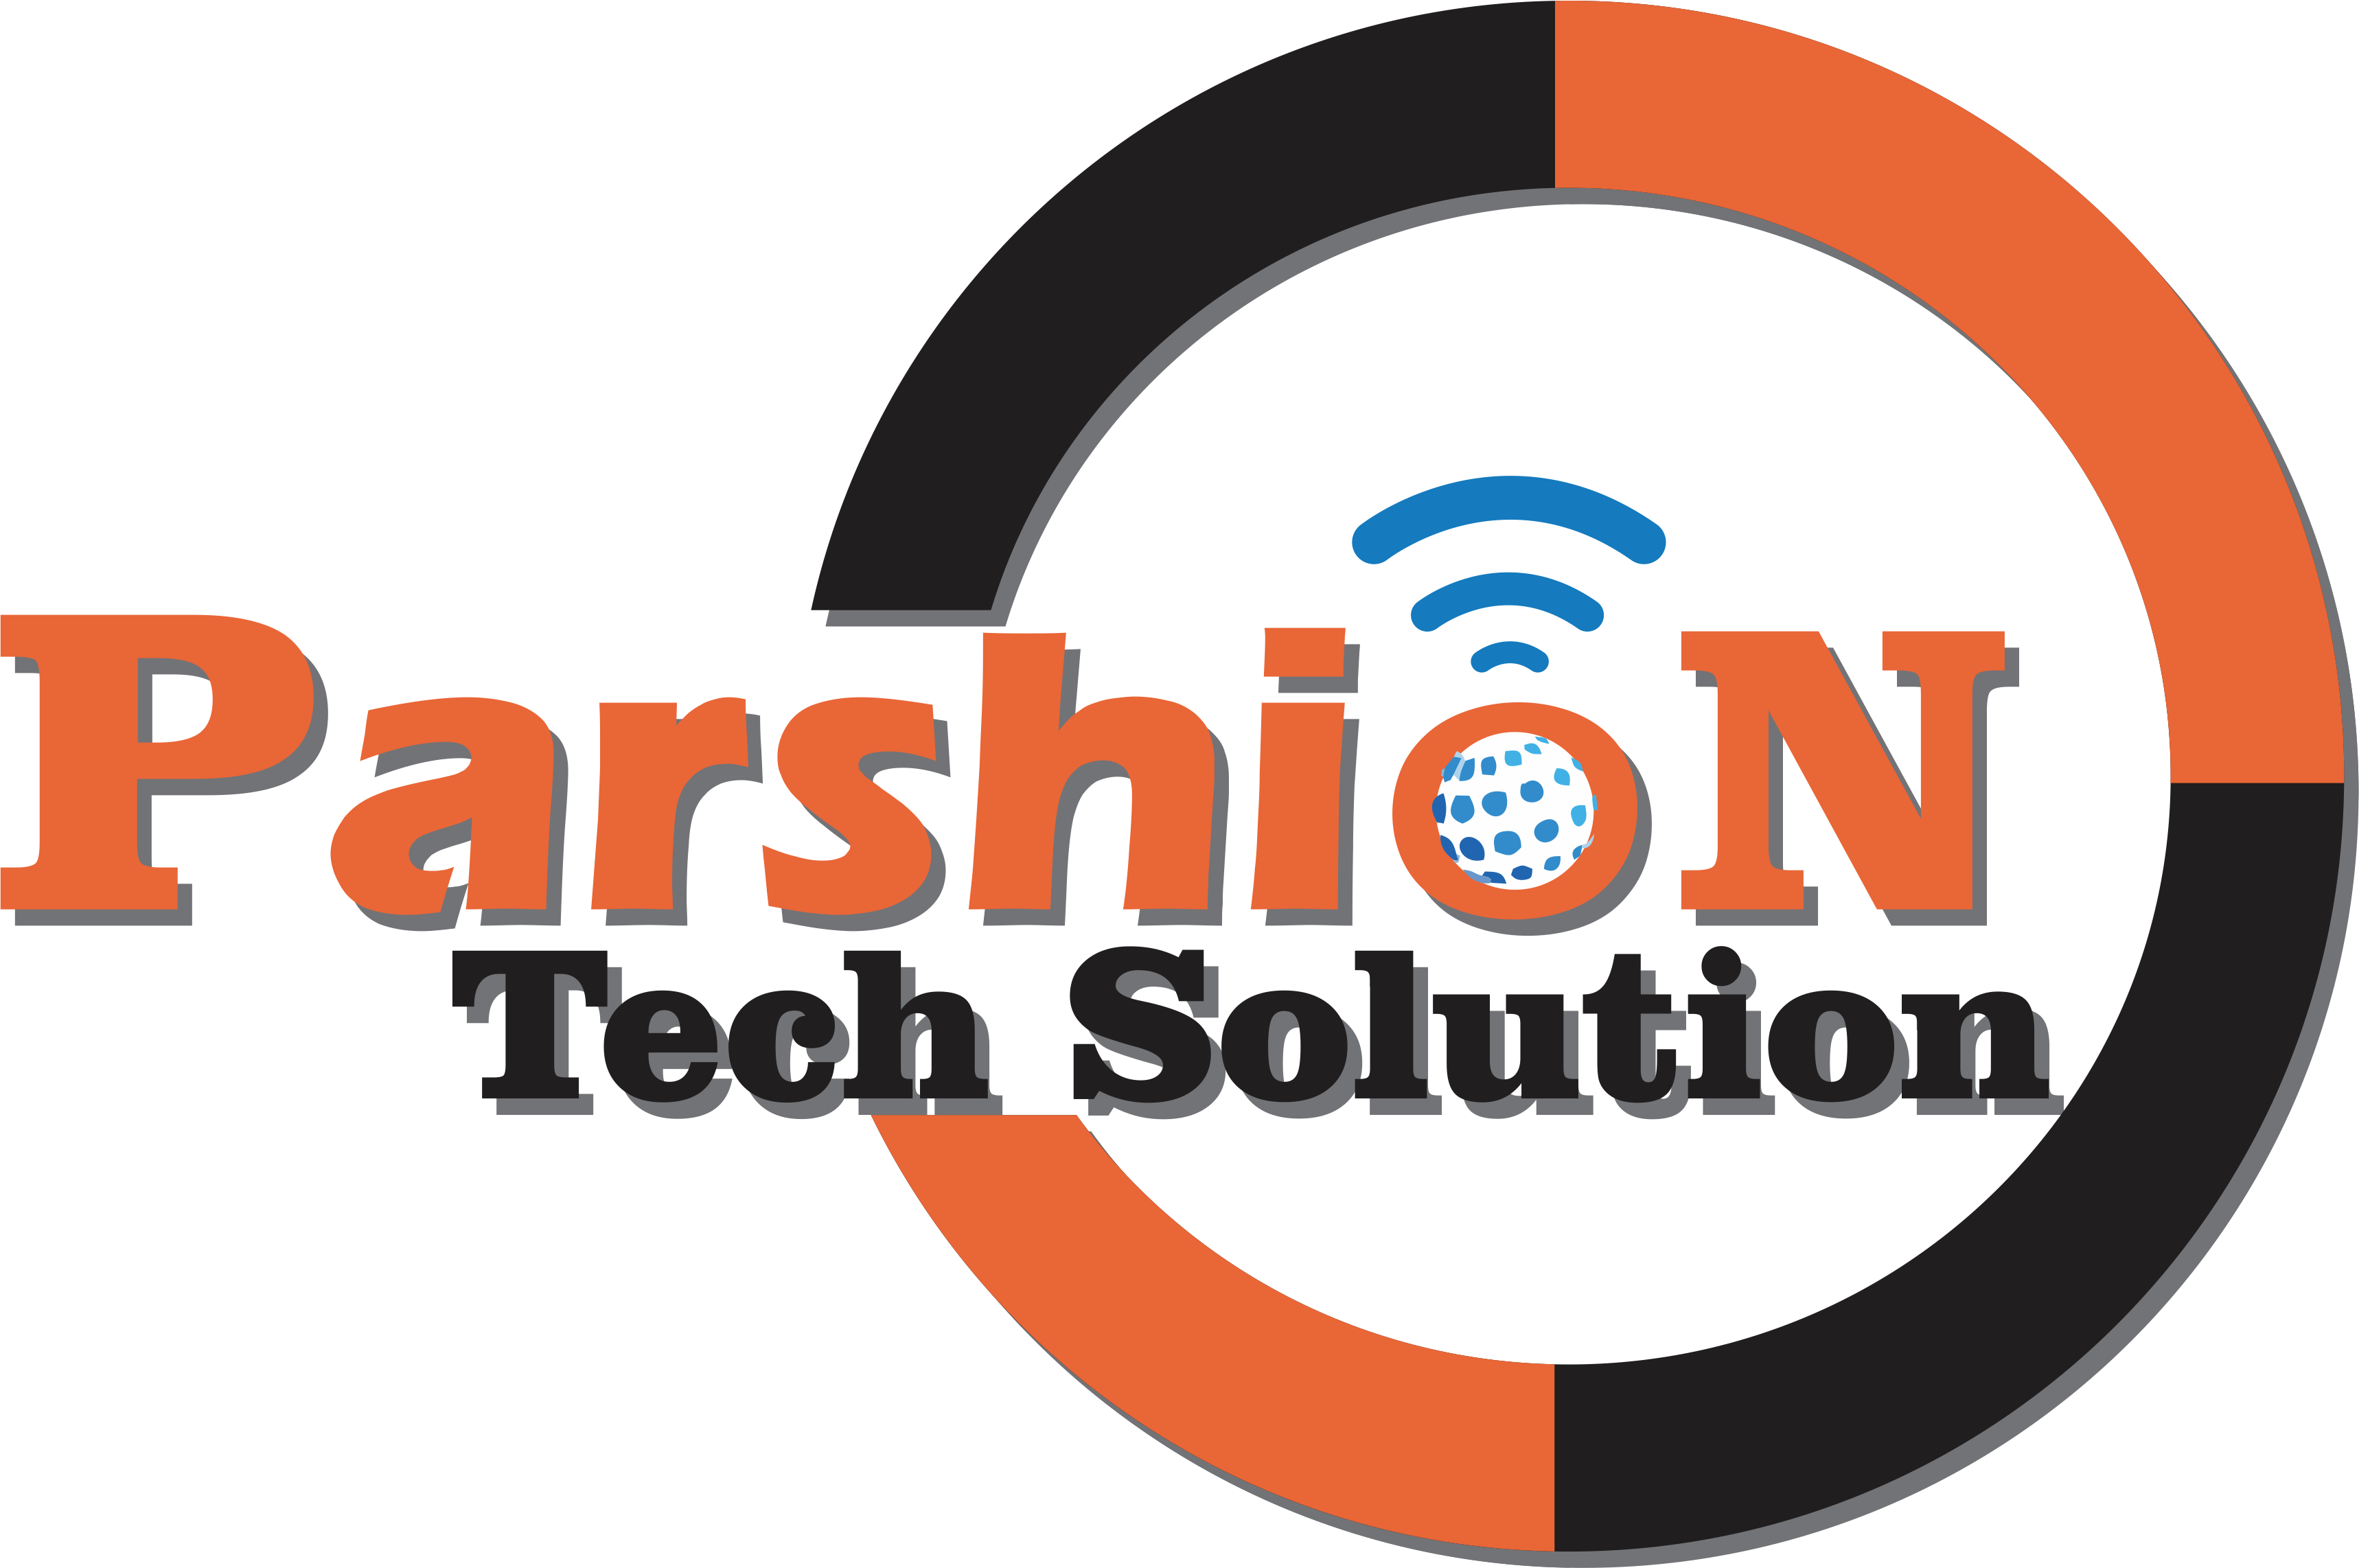 Parshion Tech Solution